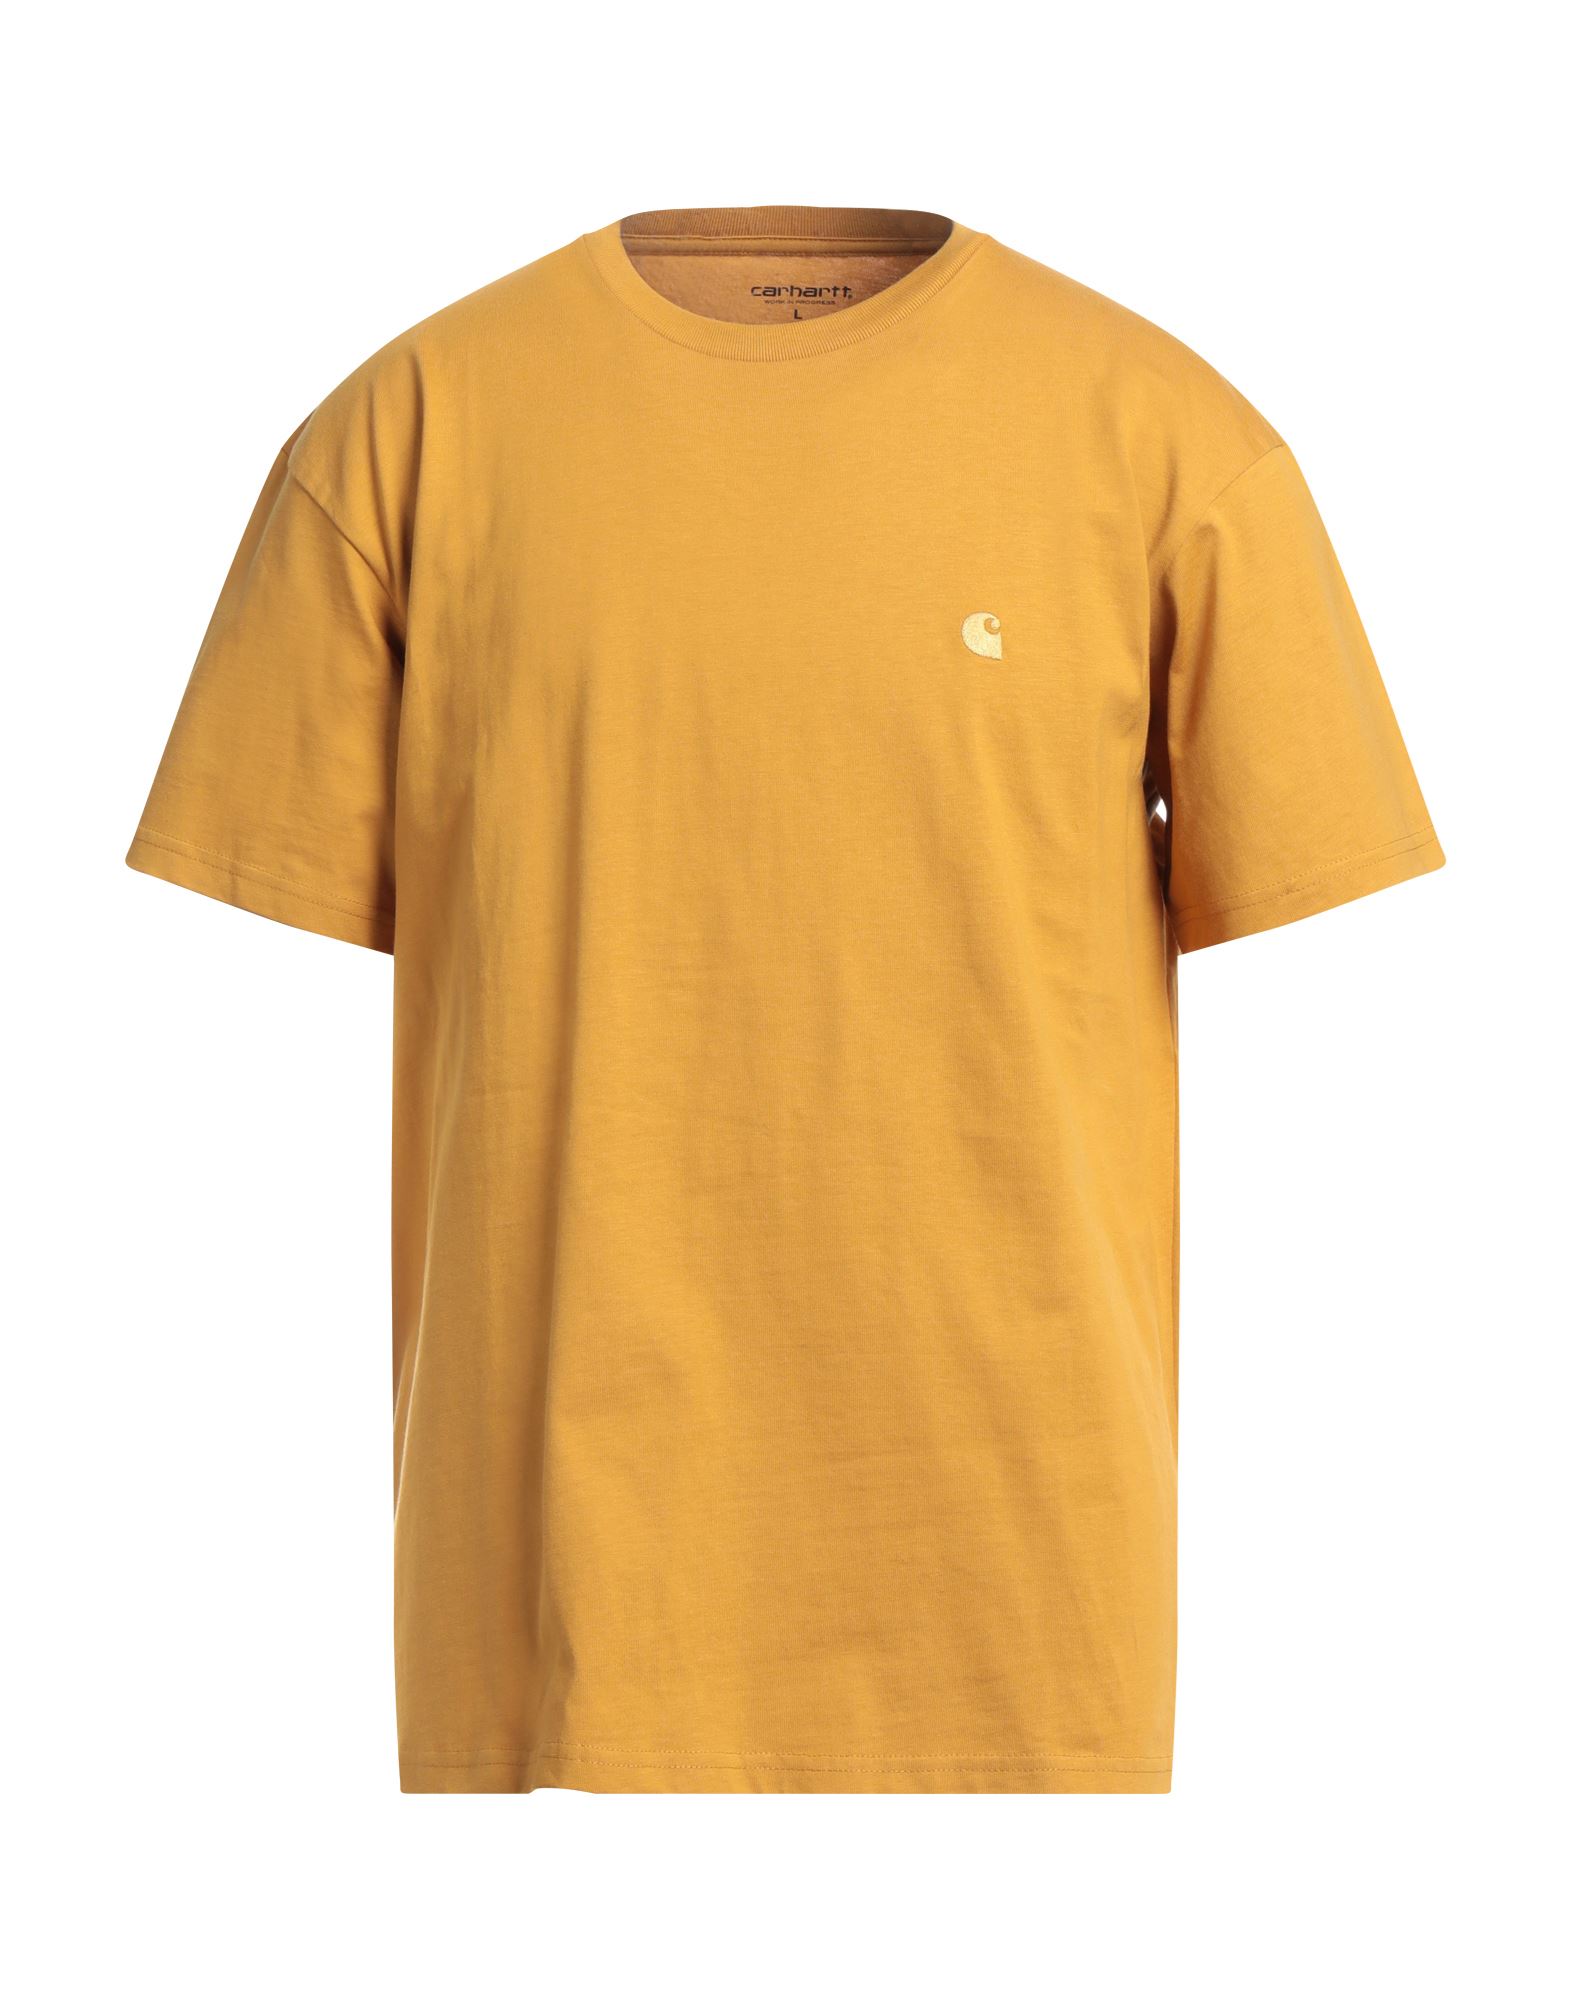 Carhartt T-shirts In Yellow